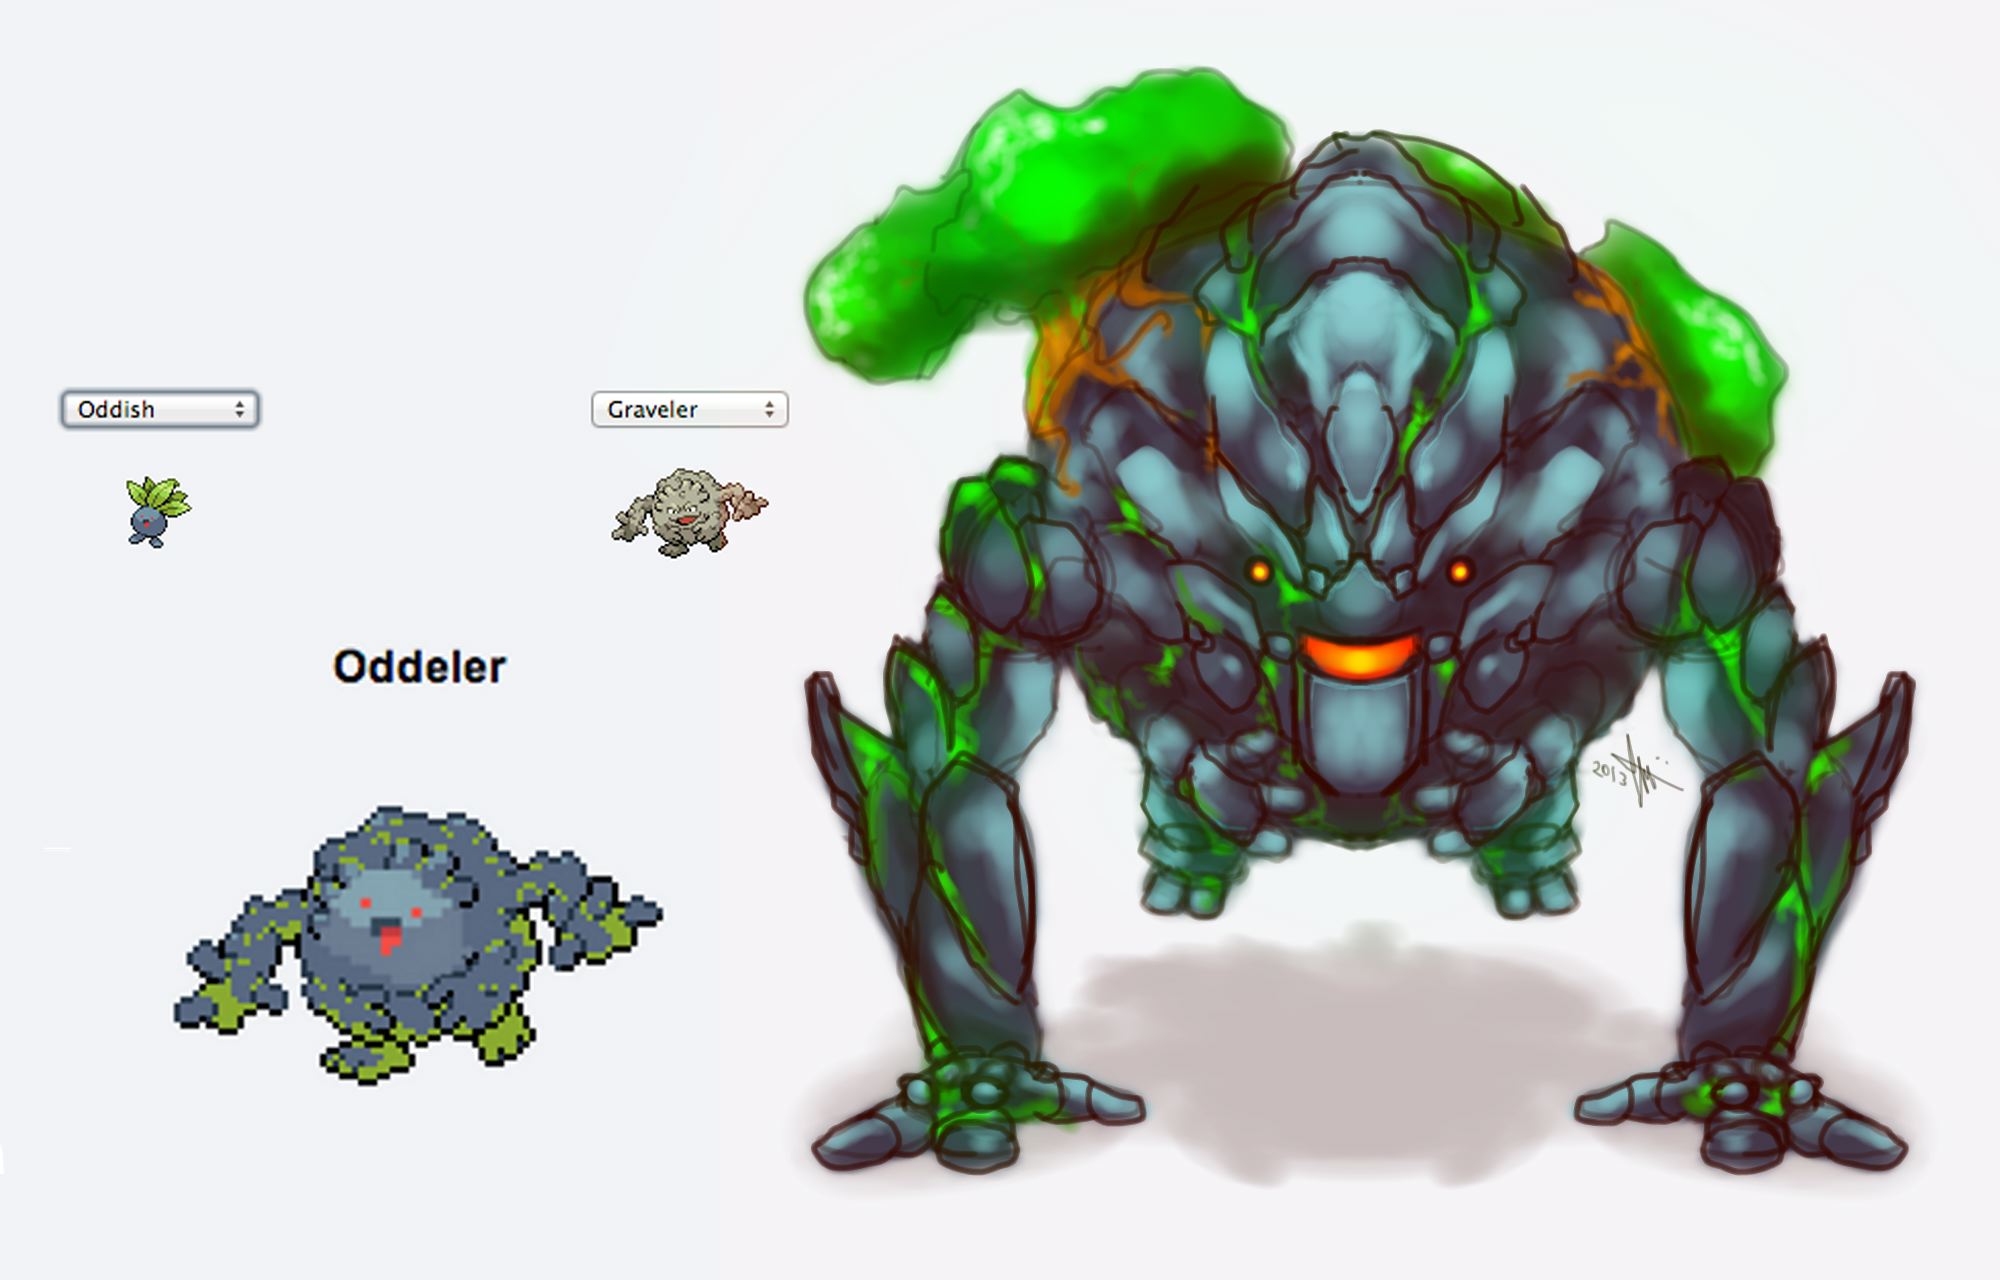 oddish pokemon fusions - Oddish Graveler Oddeler 2012